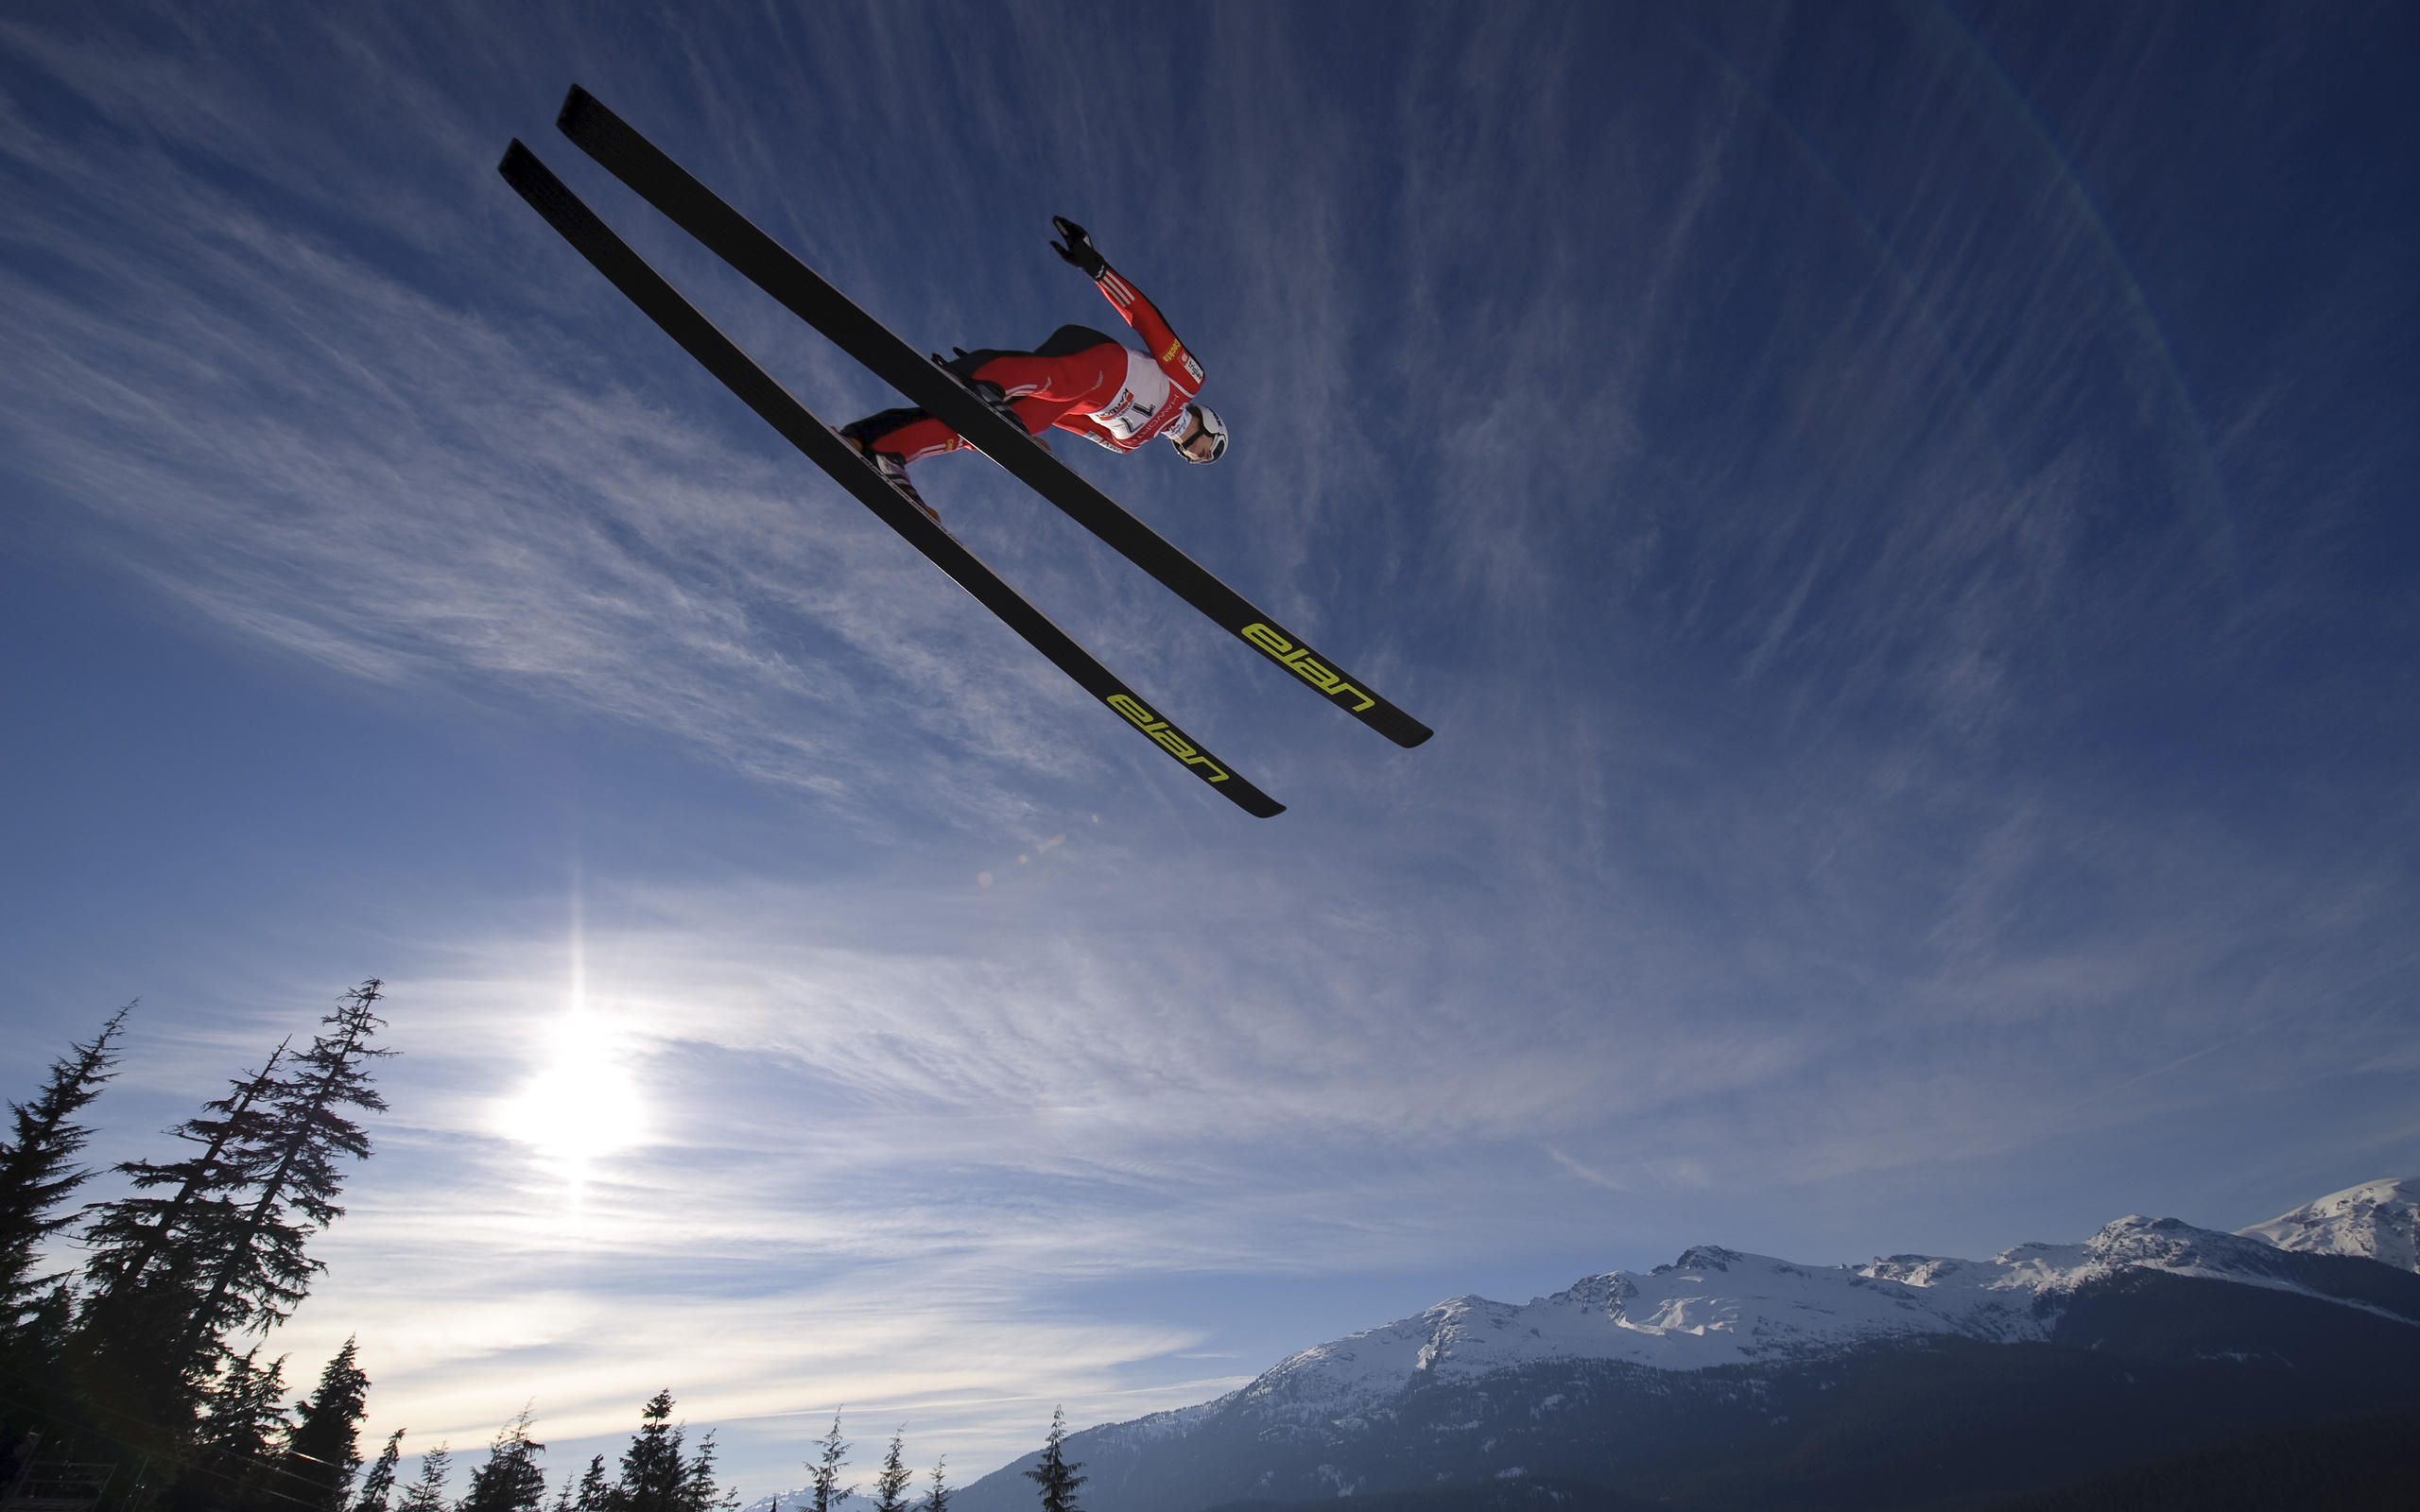 Amazing Skiing Photos